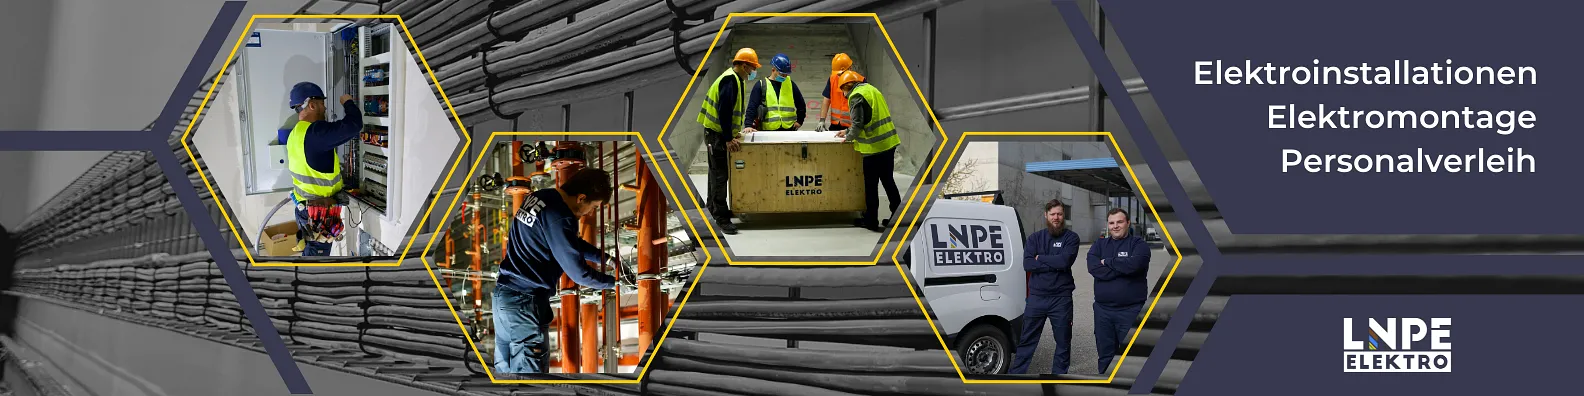 LNPE Elektro GmbH - Elektroinstallationsgeschäft